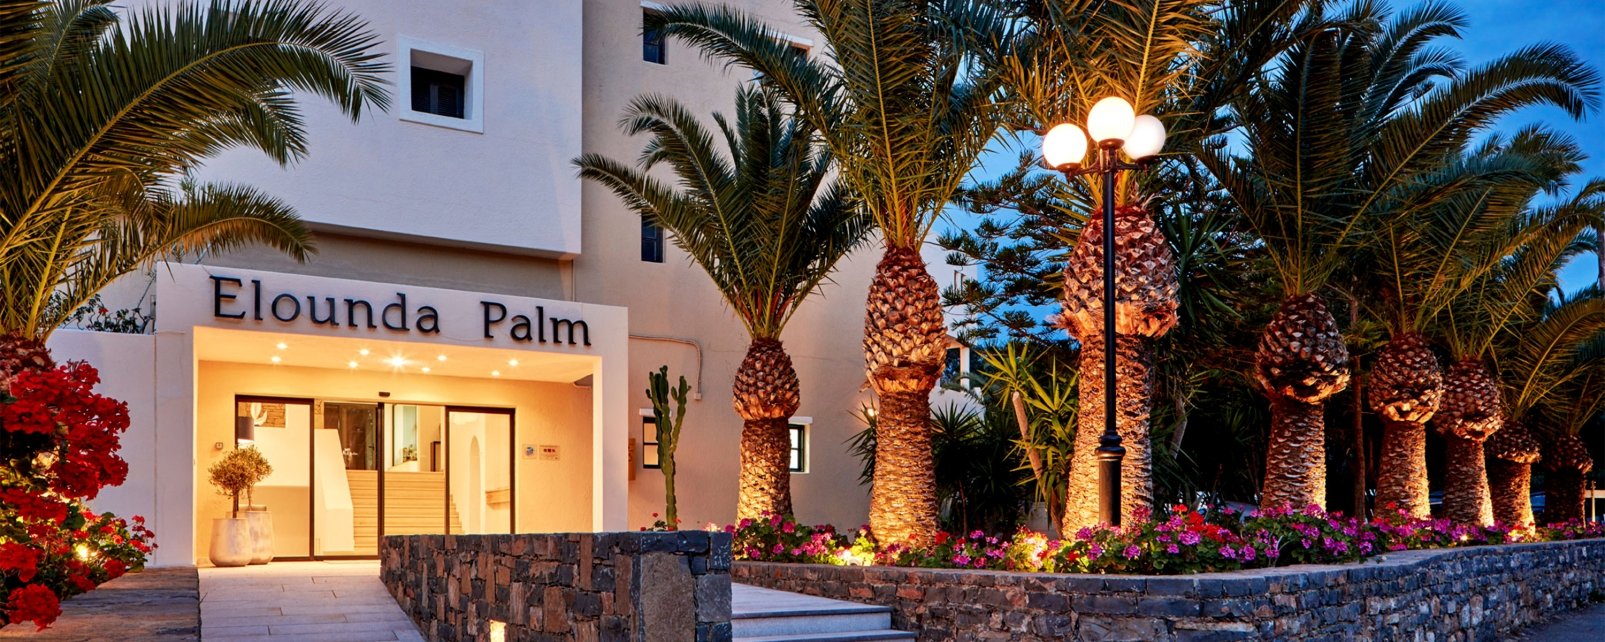 Hotel Elounda Palm